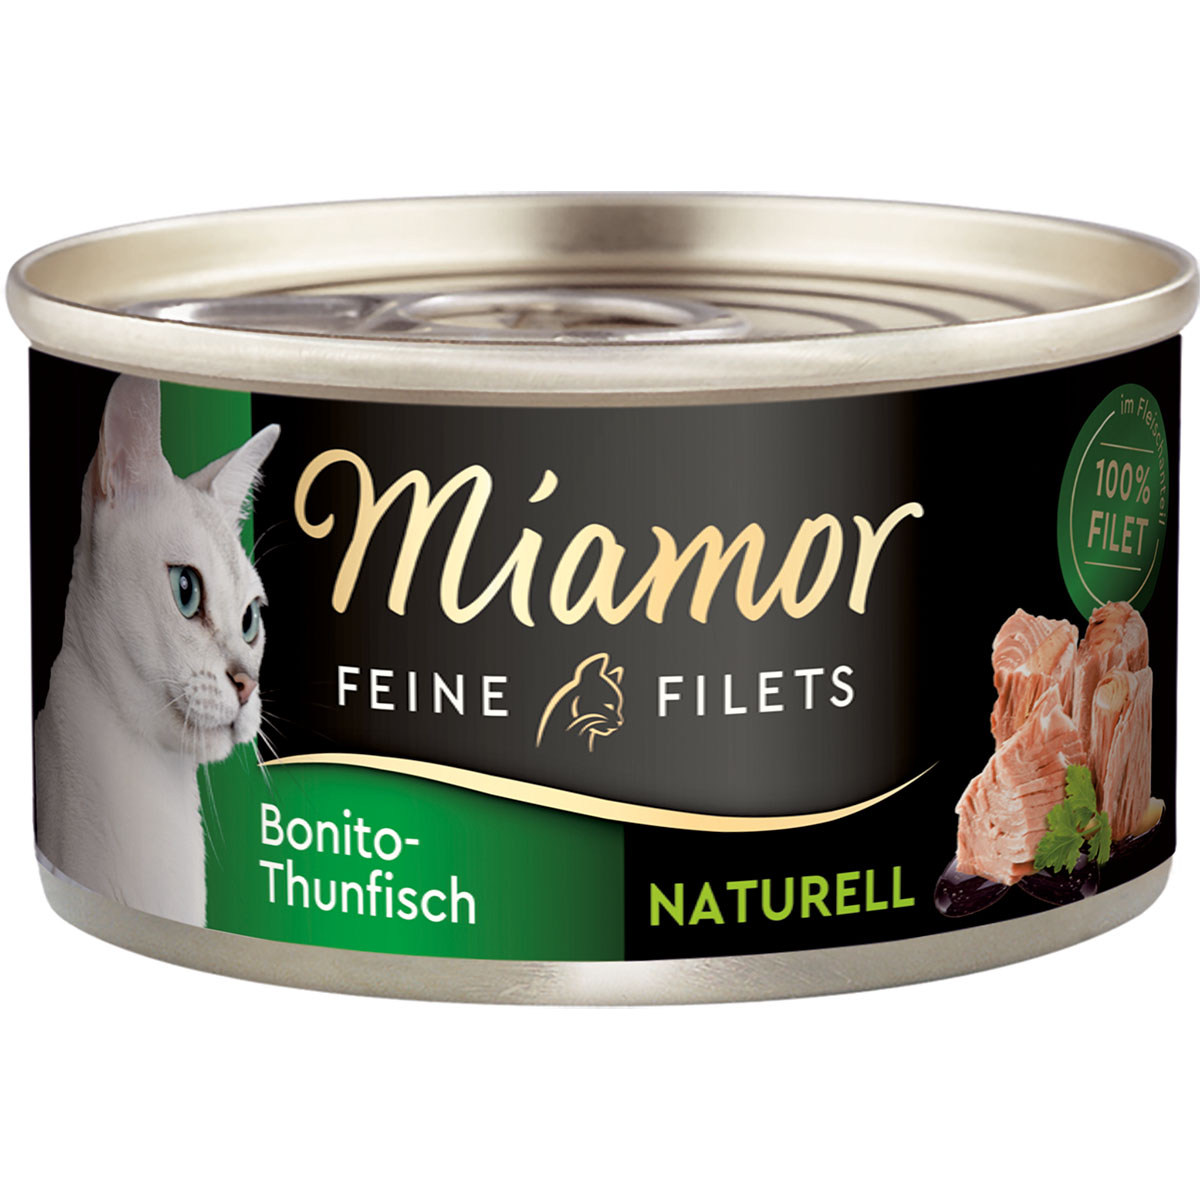 Miamor Feine Filets Naturelle Bonito-Thunfisch 48x80g von Miamor